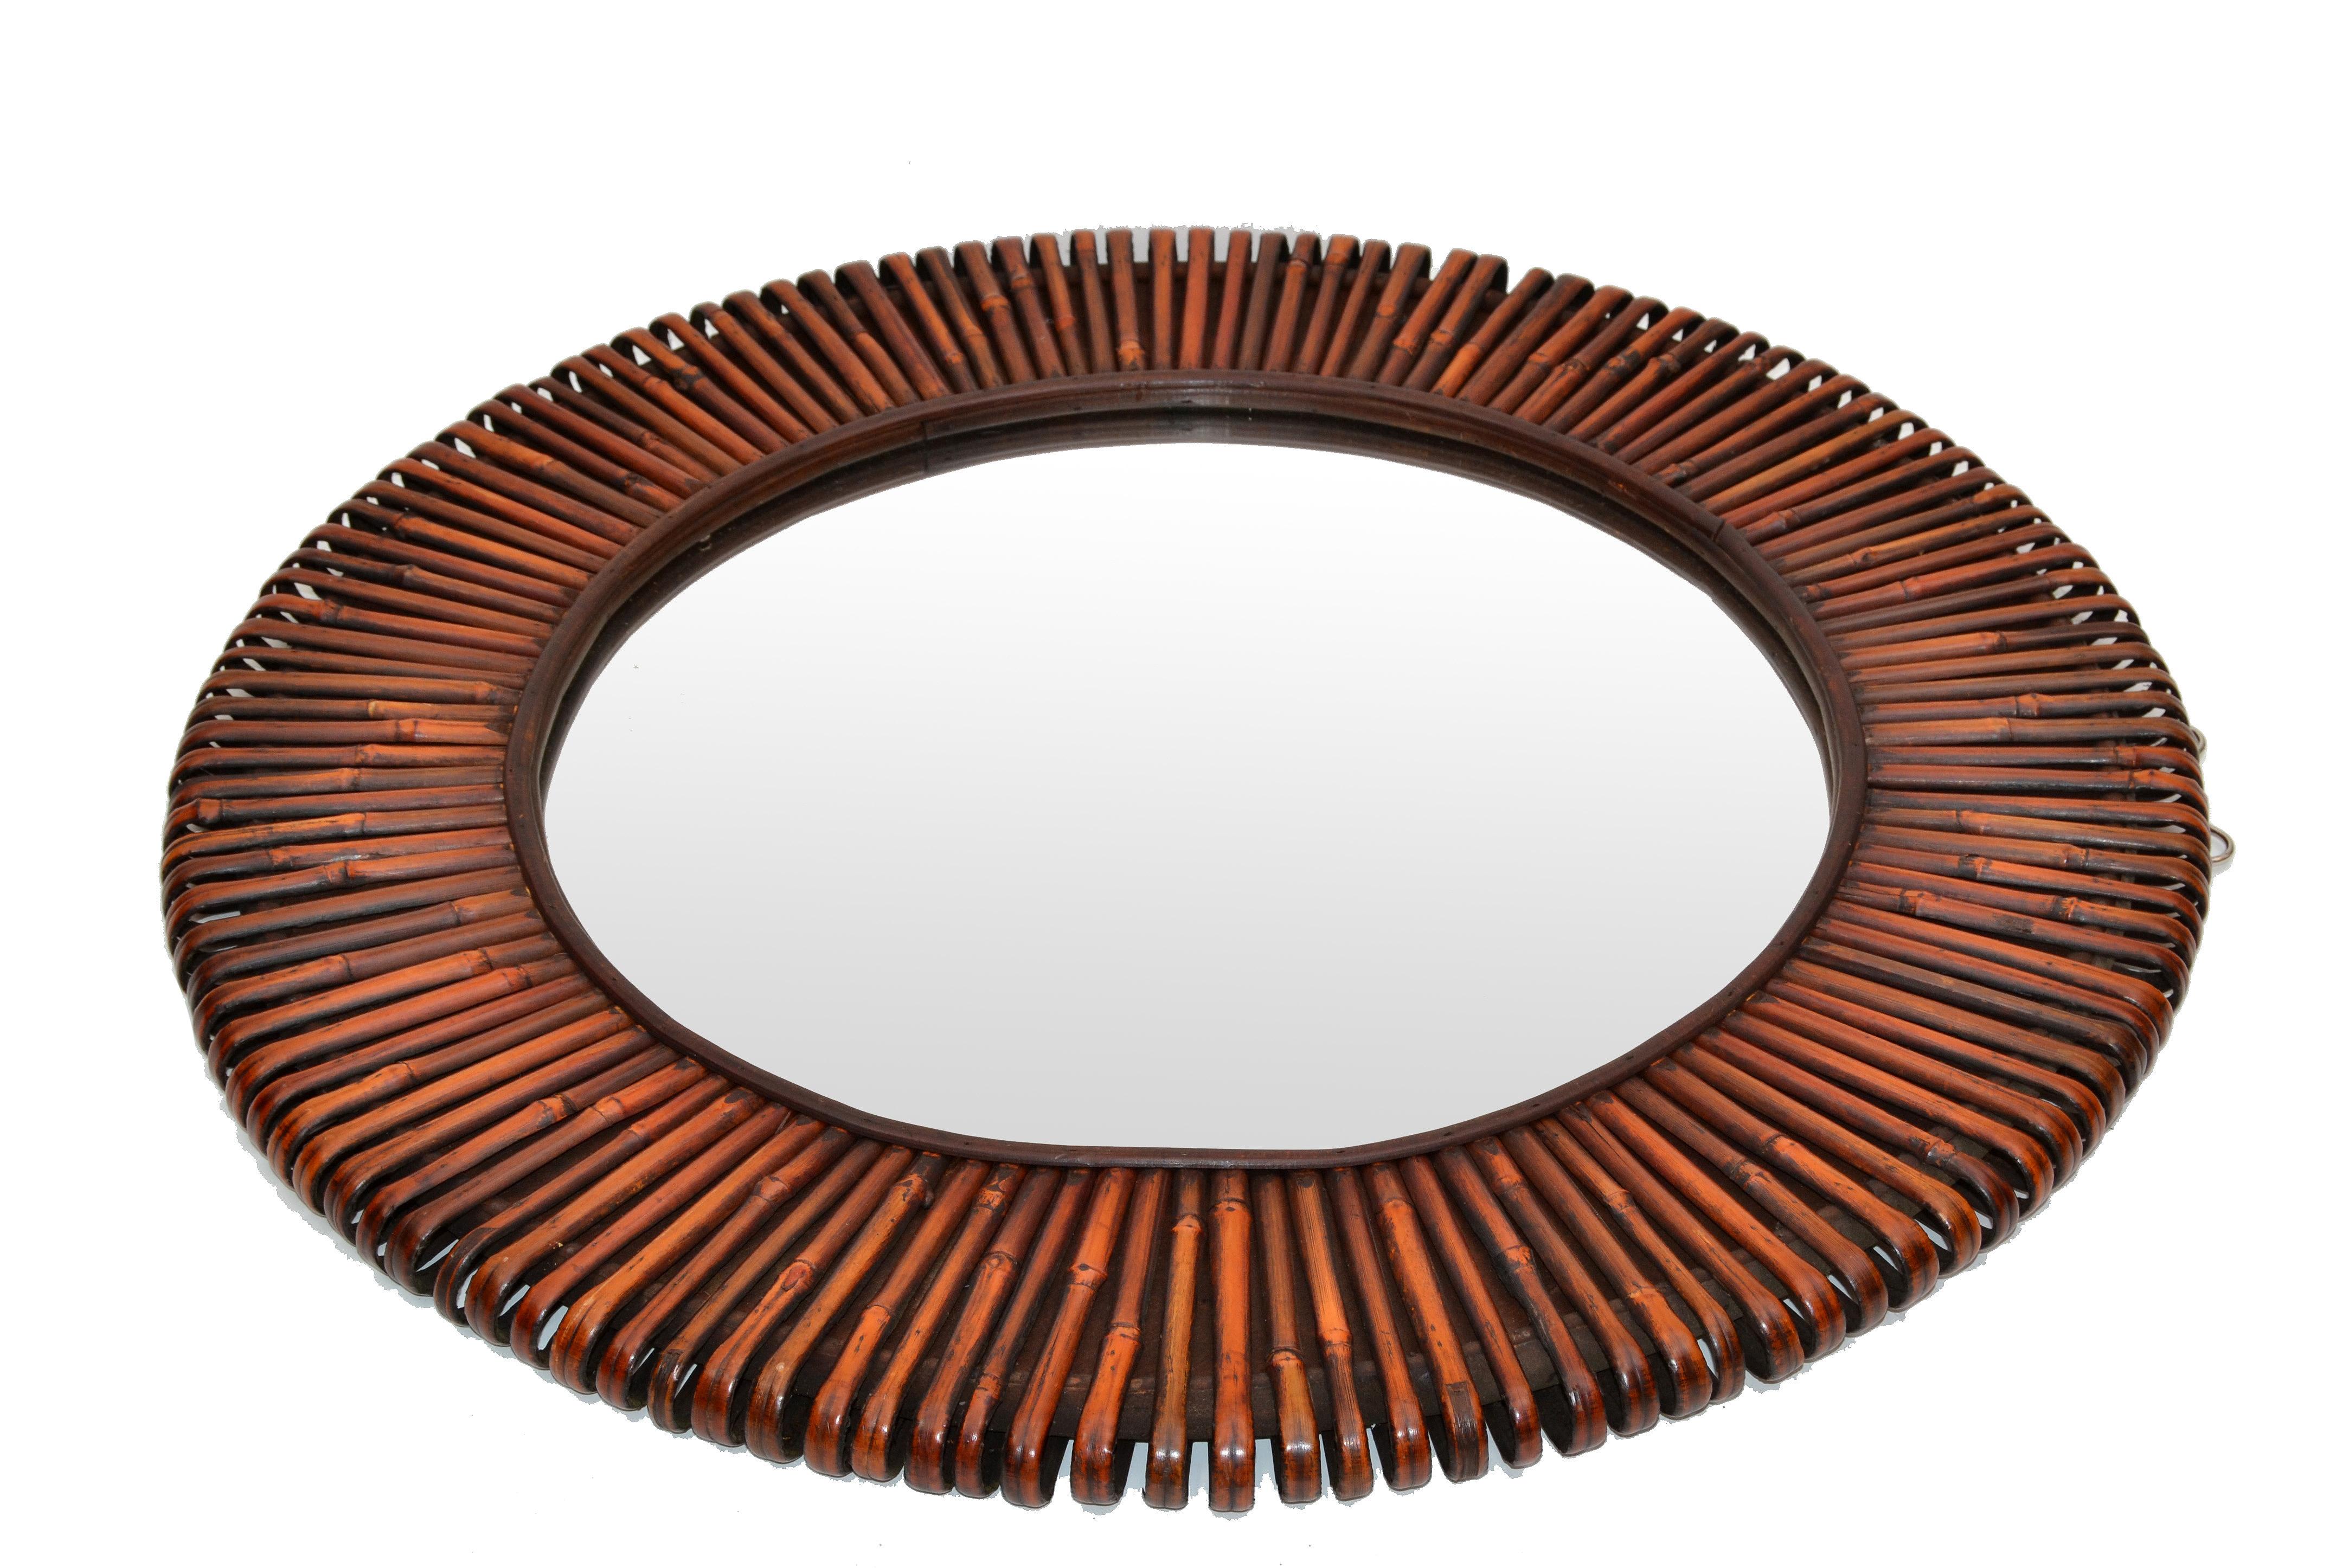 Contemporary Handcrafted Round Bent Rattan and Wood Mirror (20. Jahrhundert)